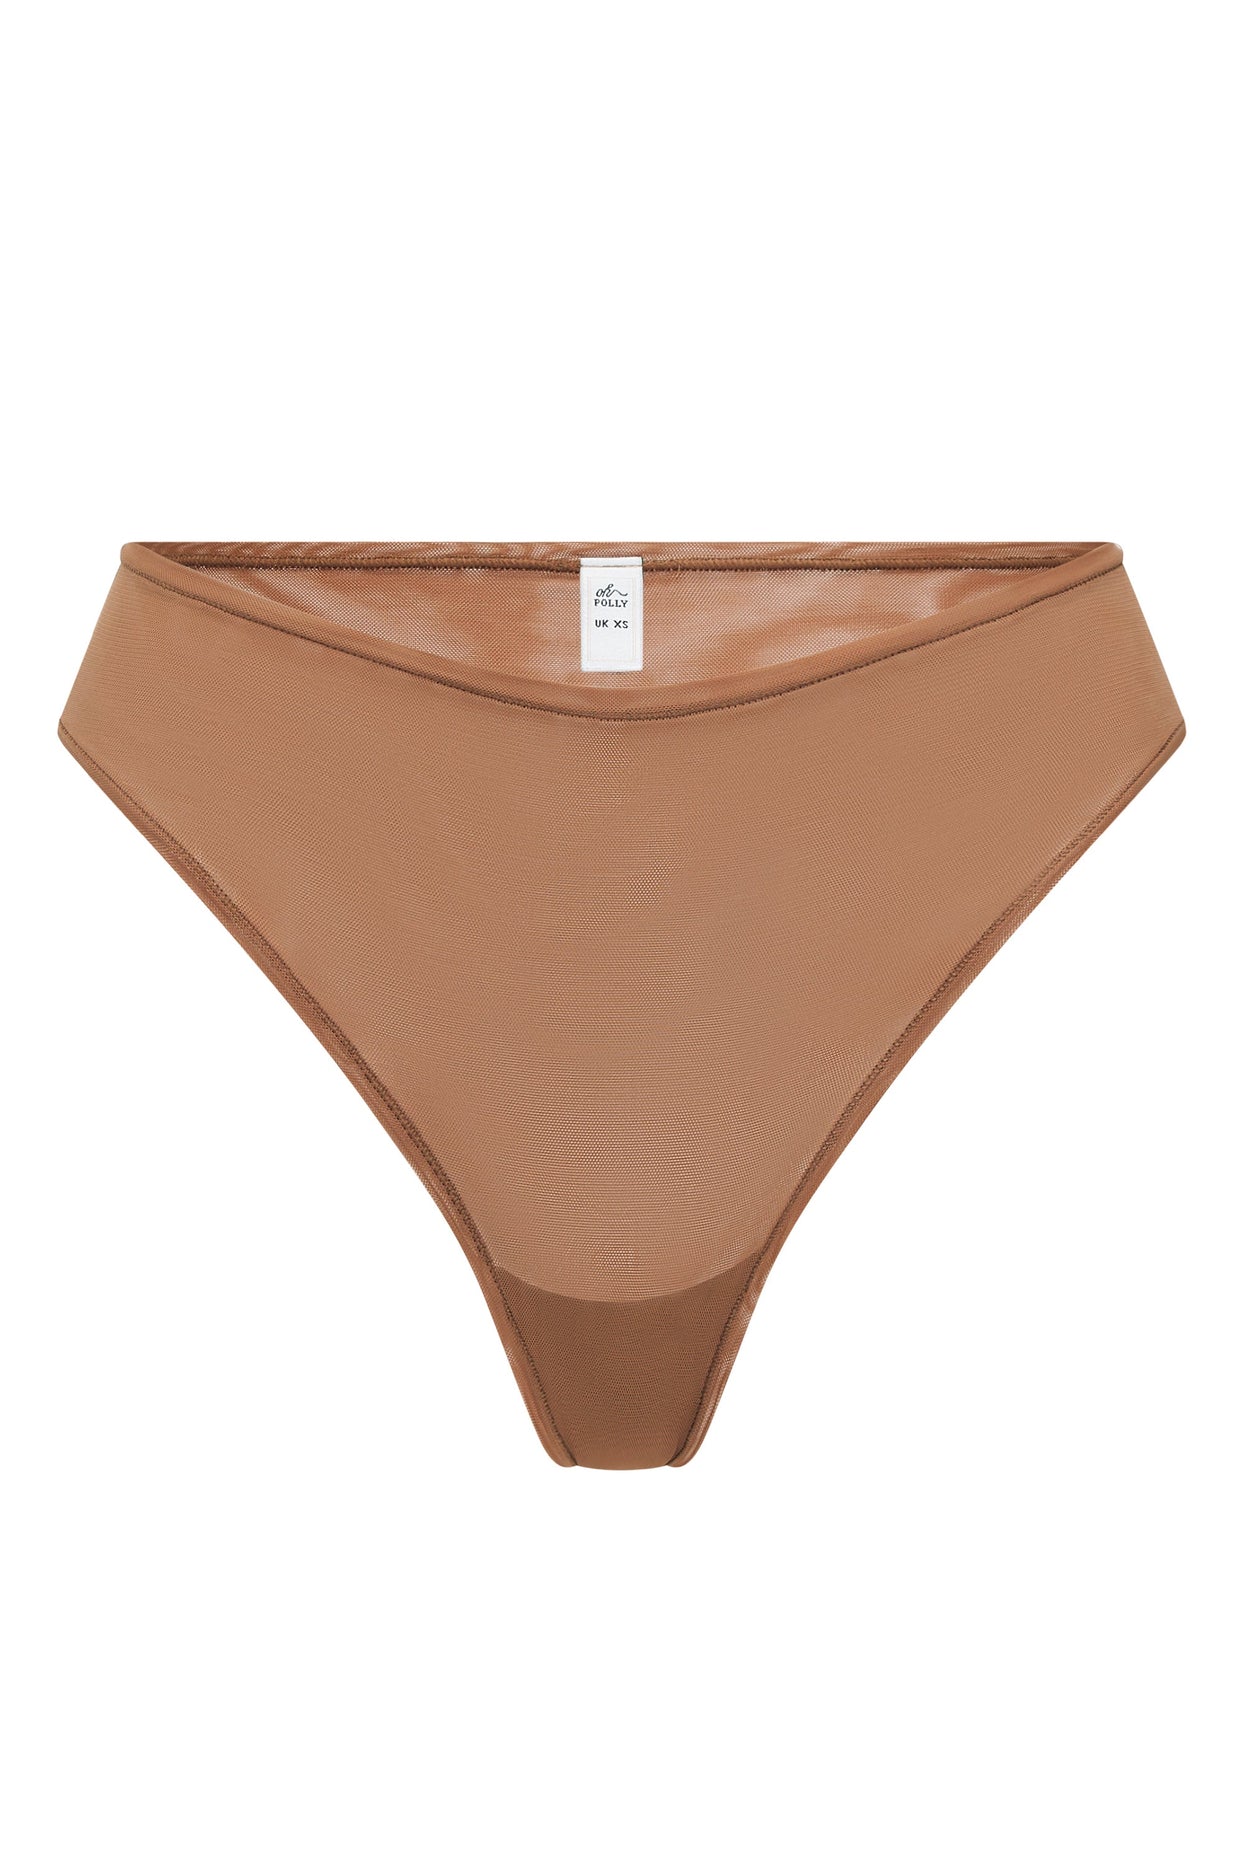 Premium Photo  Women's cotton underwear panties and bodice haute